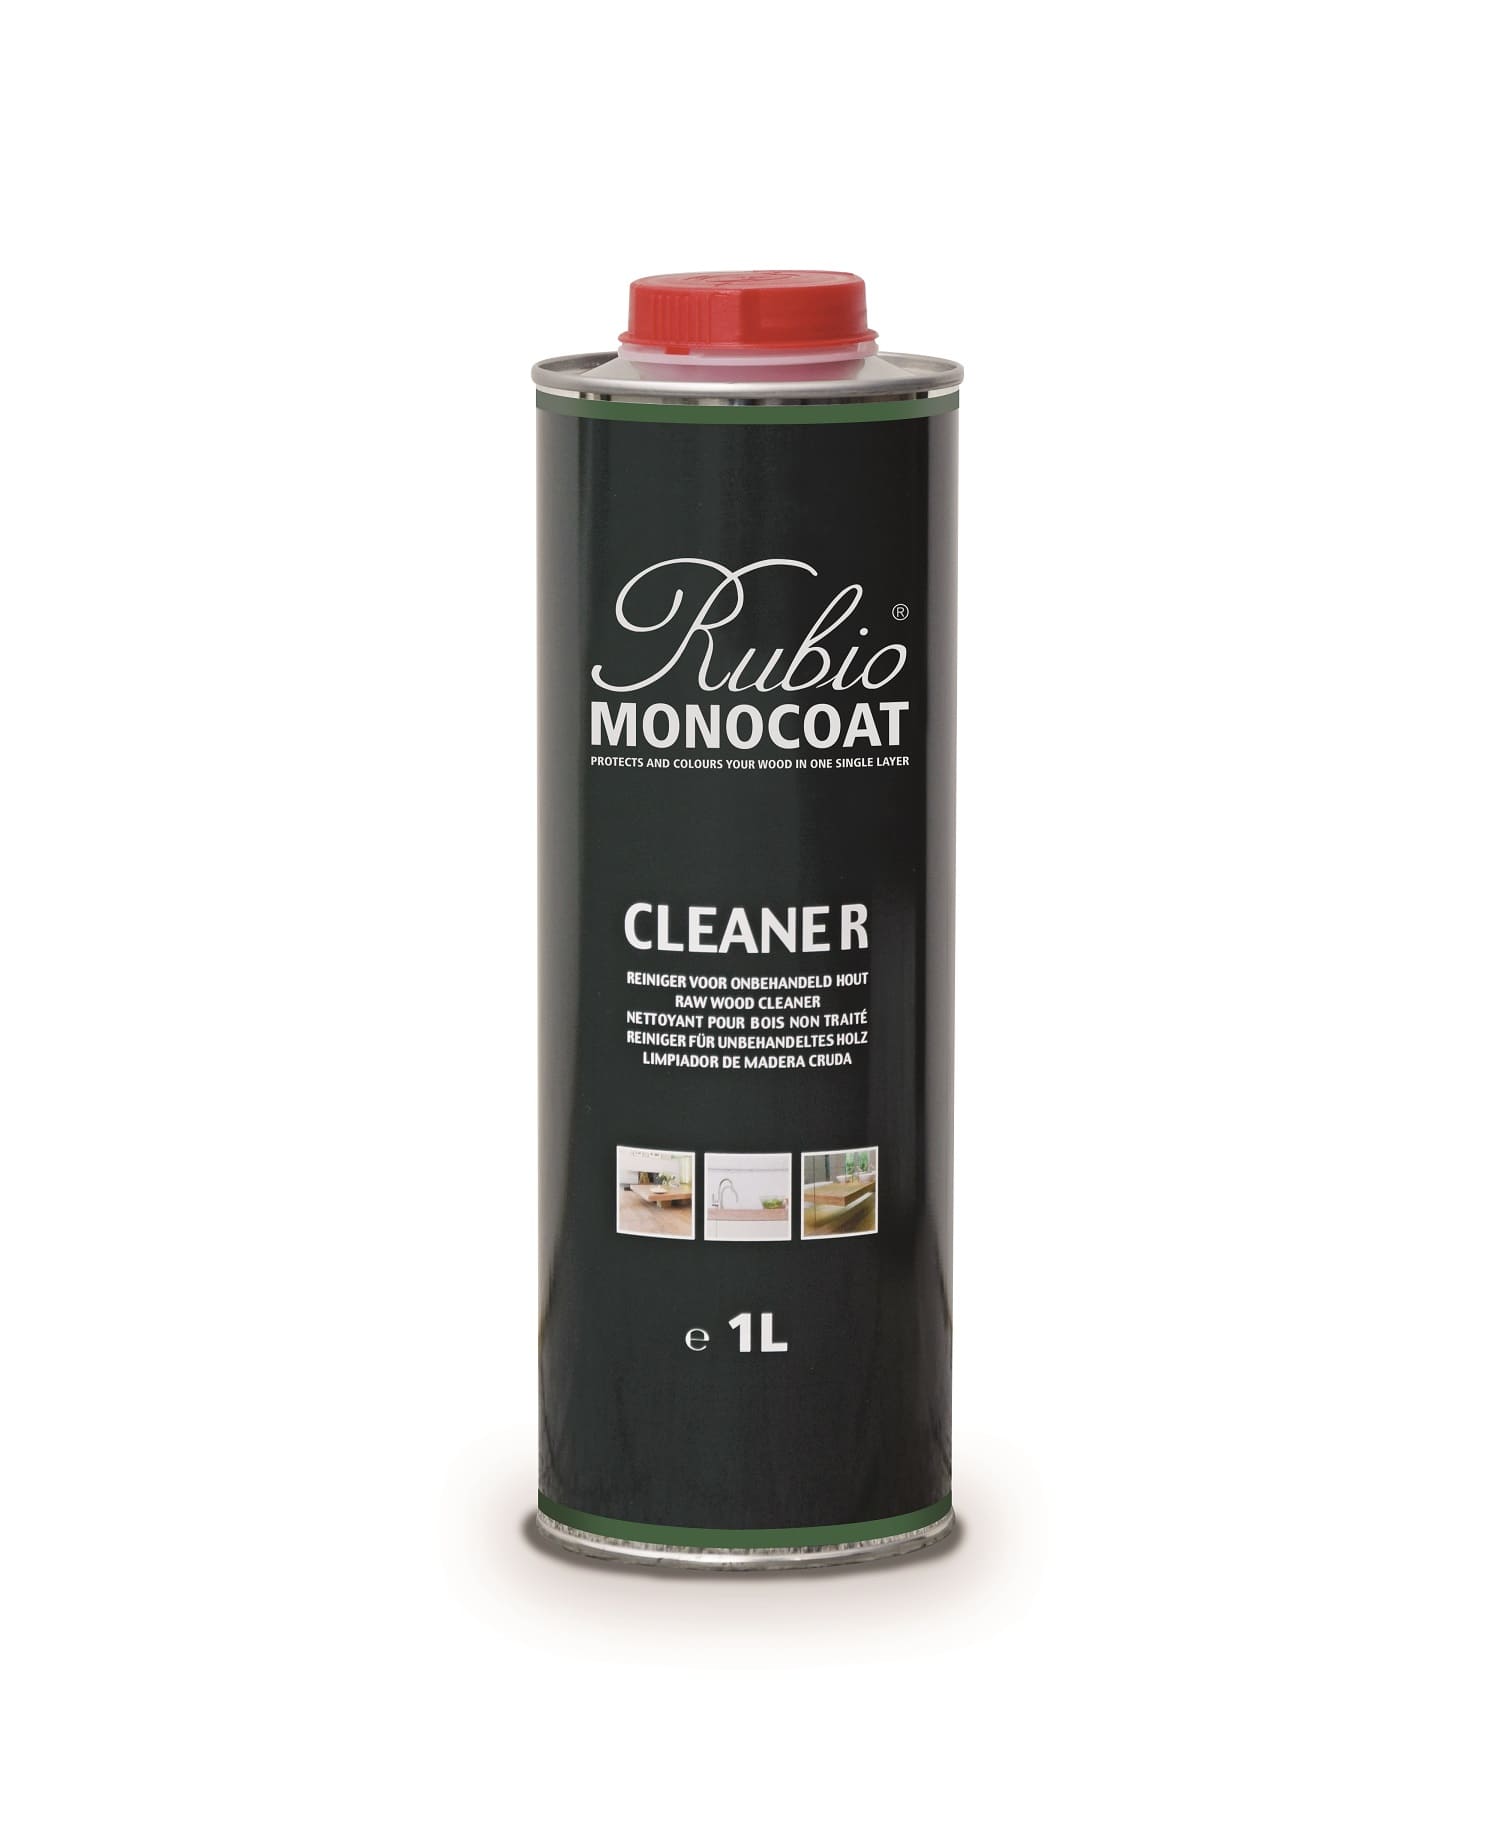 Se Rubio Monocoat Cleaner - 1 L hos Dorch & Danola A/S